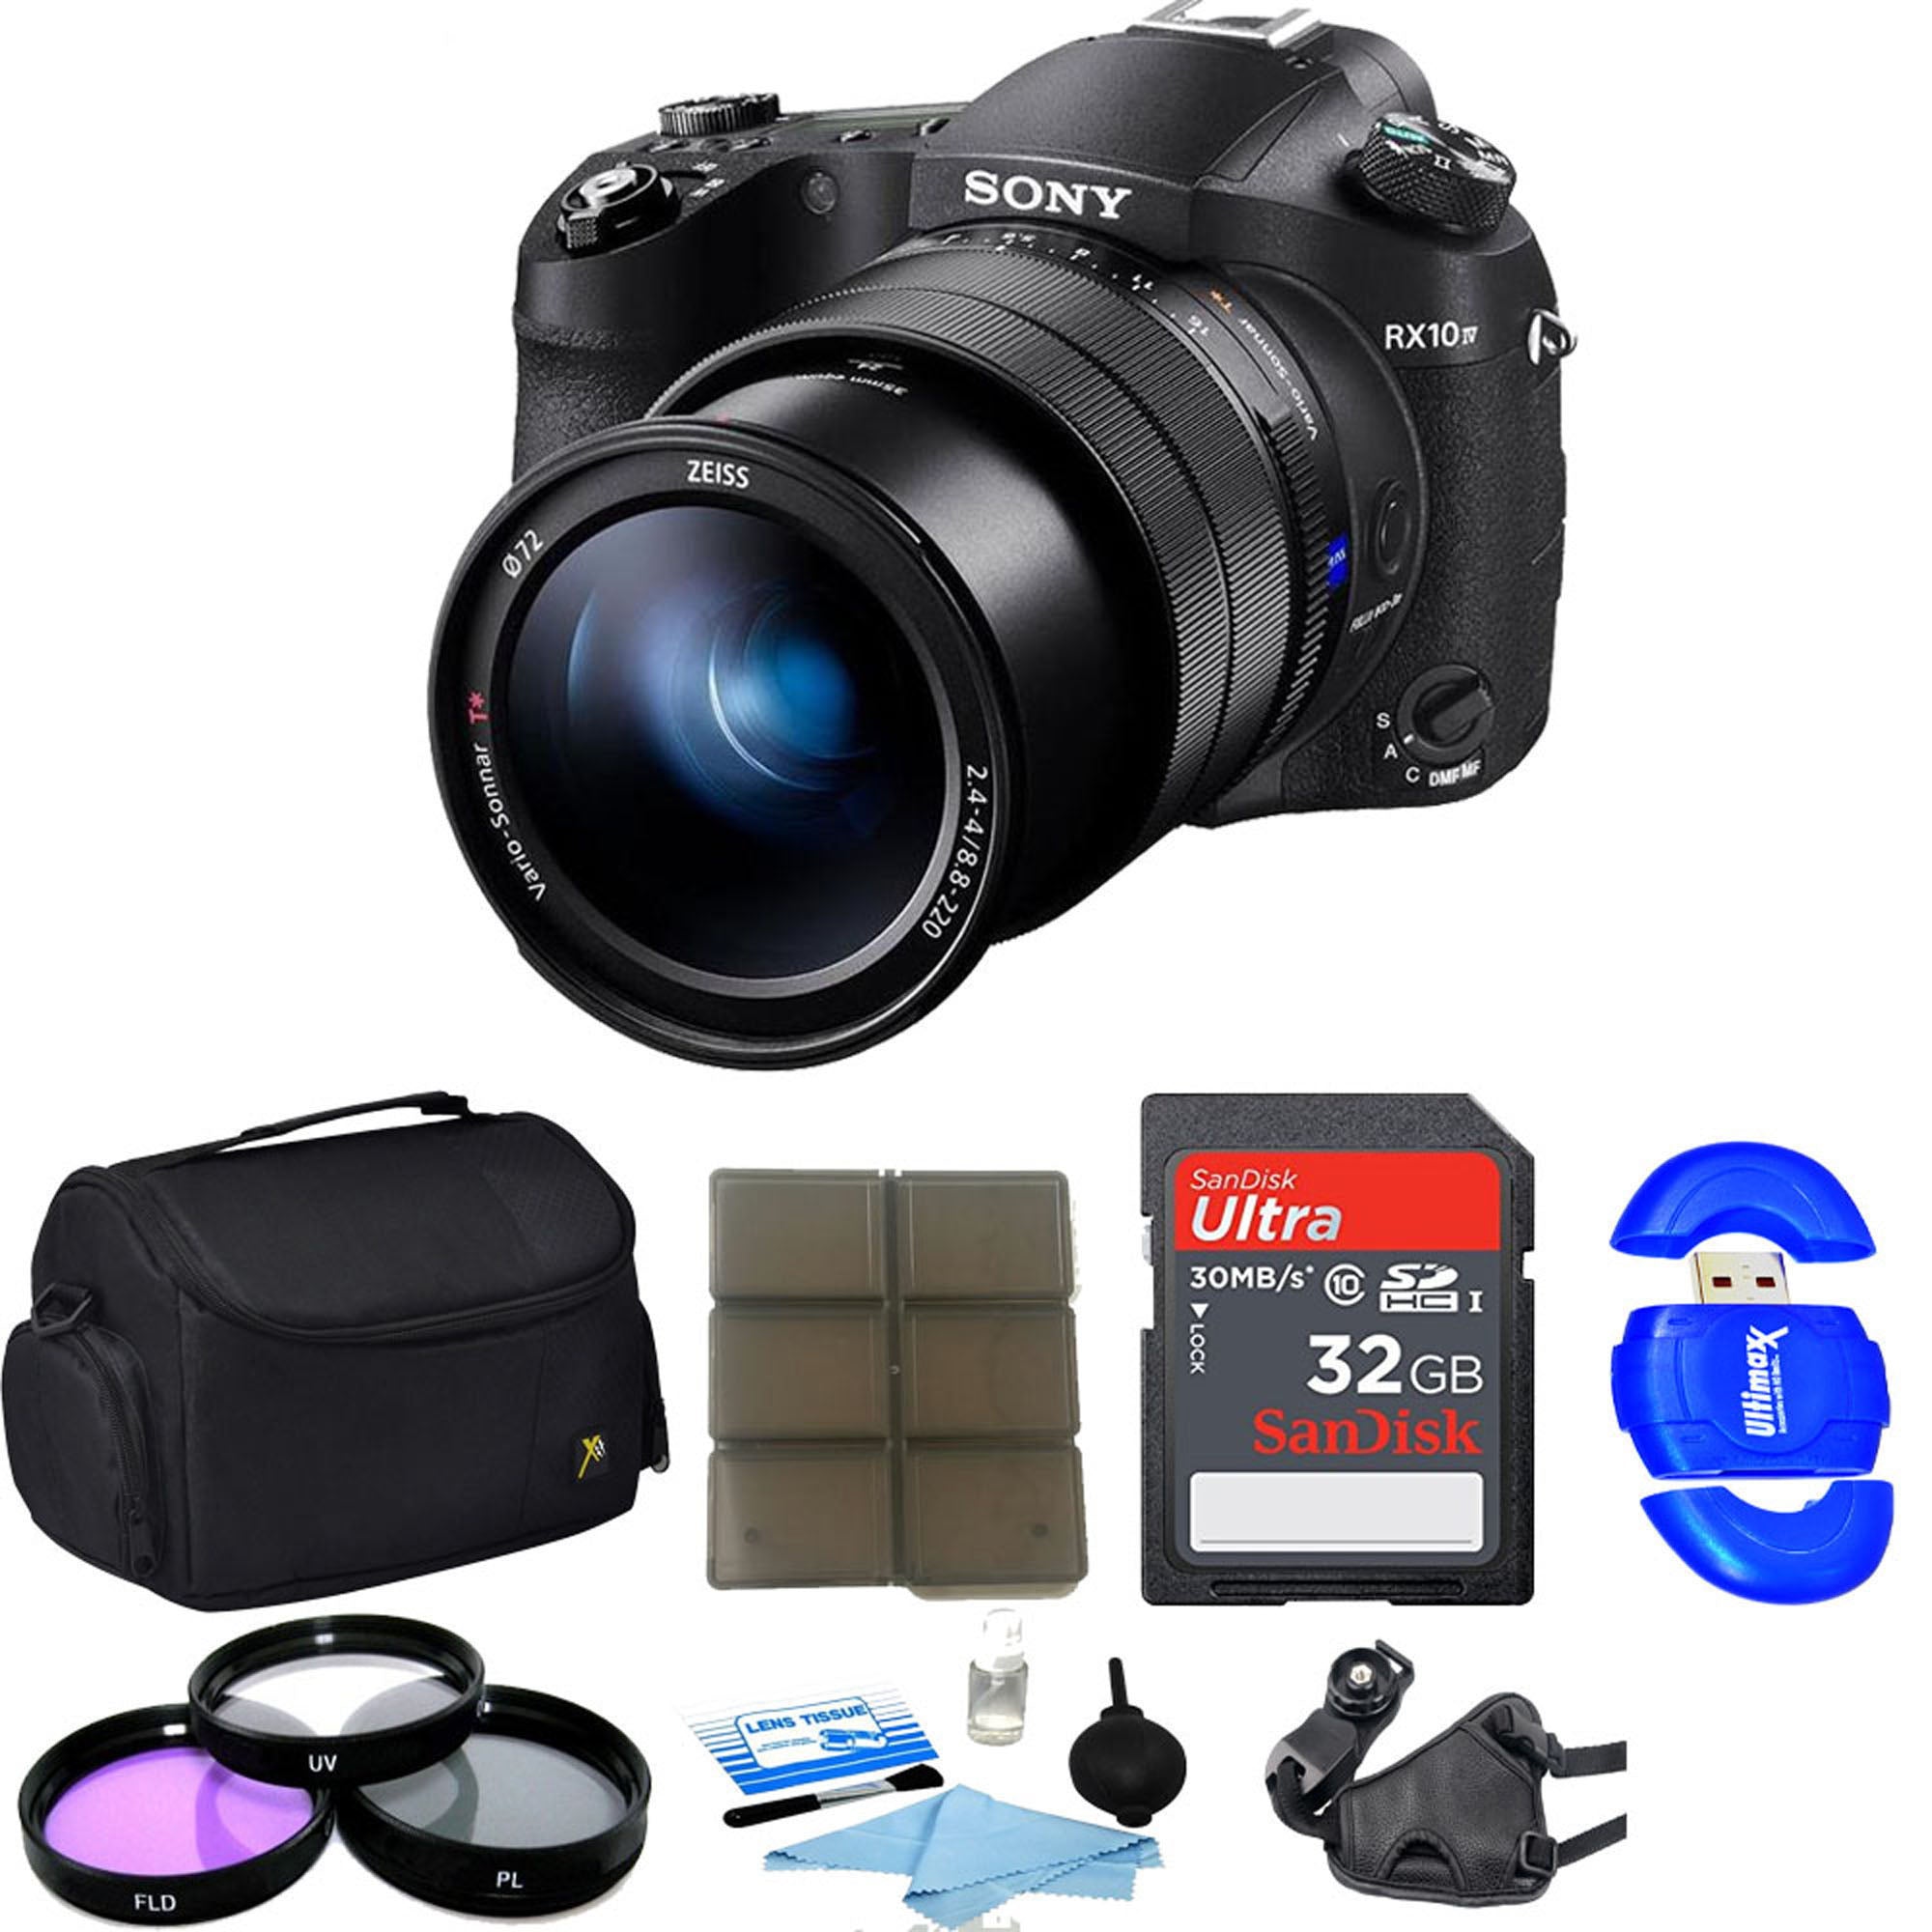  Sony Cyber-Shot DSC-RX100 Digital Camera with Battery and 32GB  SD Card Bundle : Digital Camera Accessory Kits : Electronics